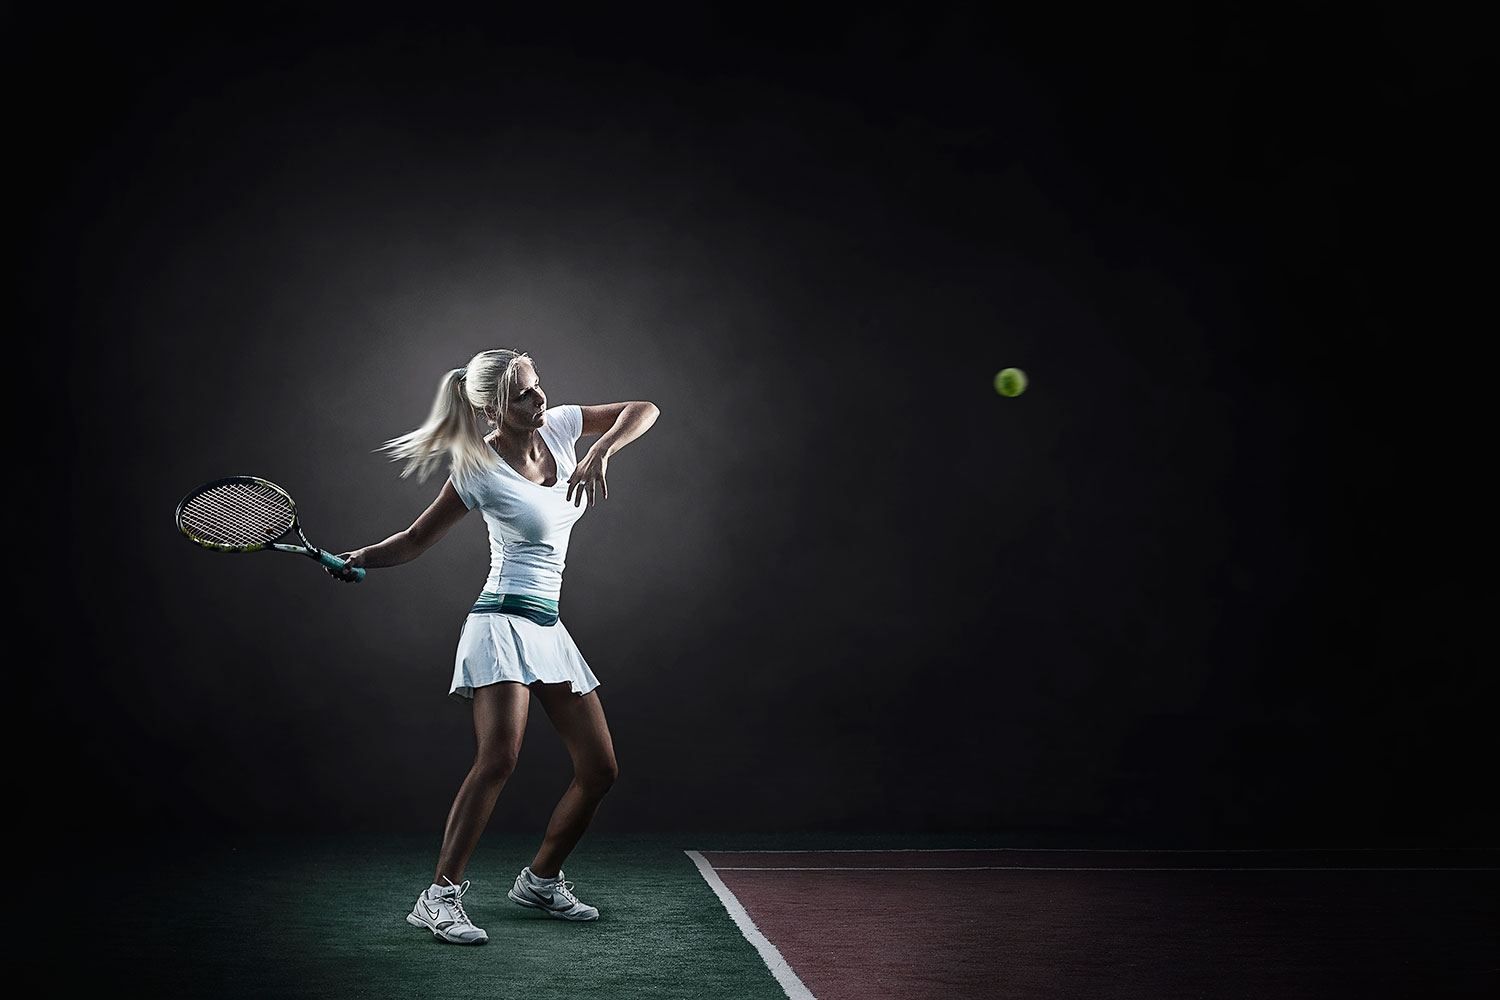 Tennis canli izle. Падел теннис. Теннисистка фотосессия. Теннис реклама. Большой теннис девушки.